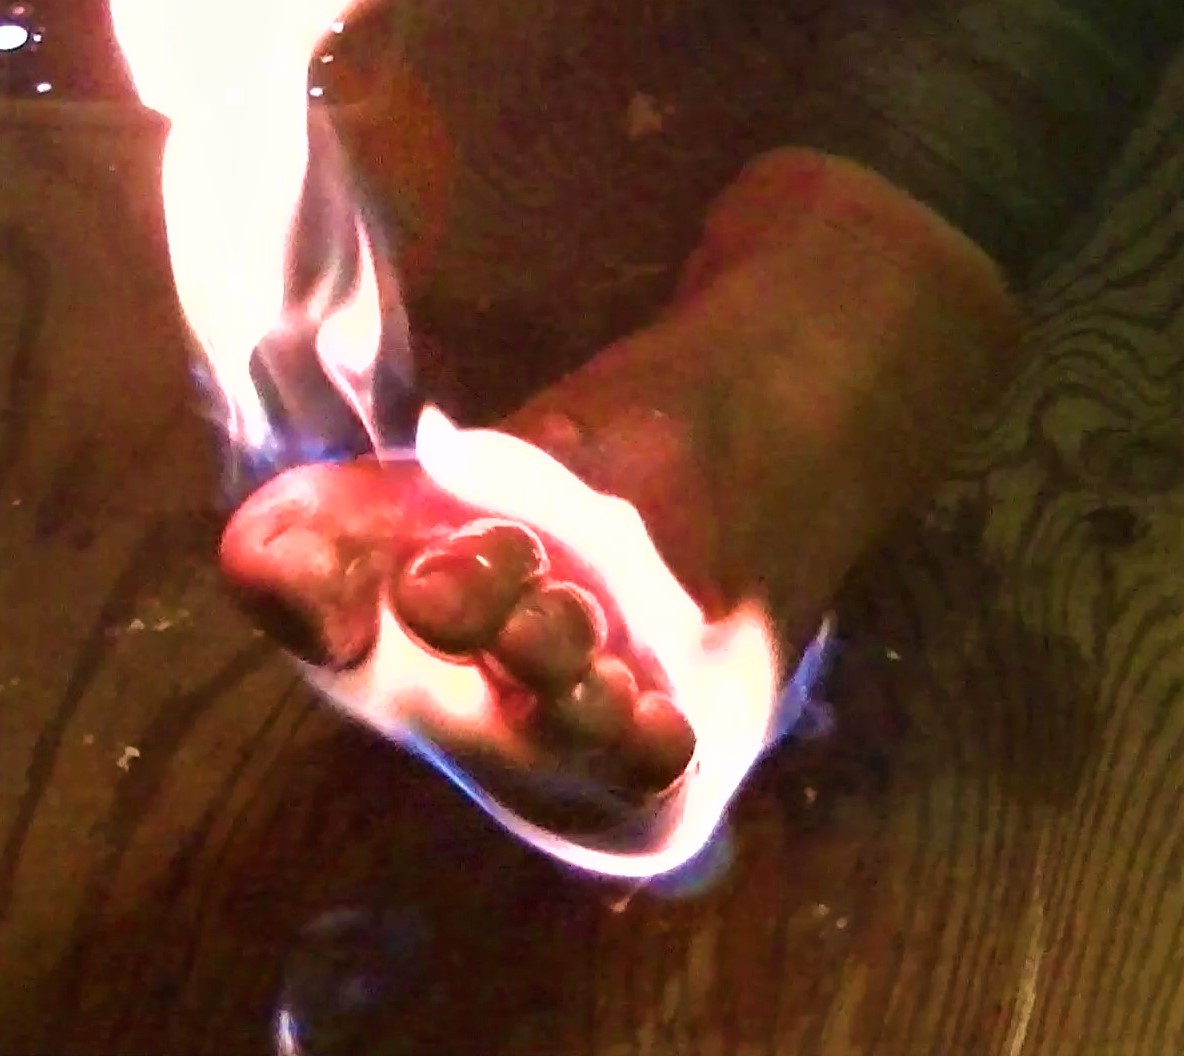 Barefoot Torture Porn - Deep burn foot fire torture - video 7 - ThisVid.com